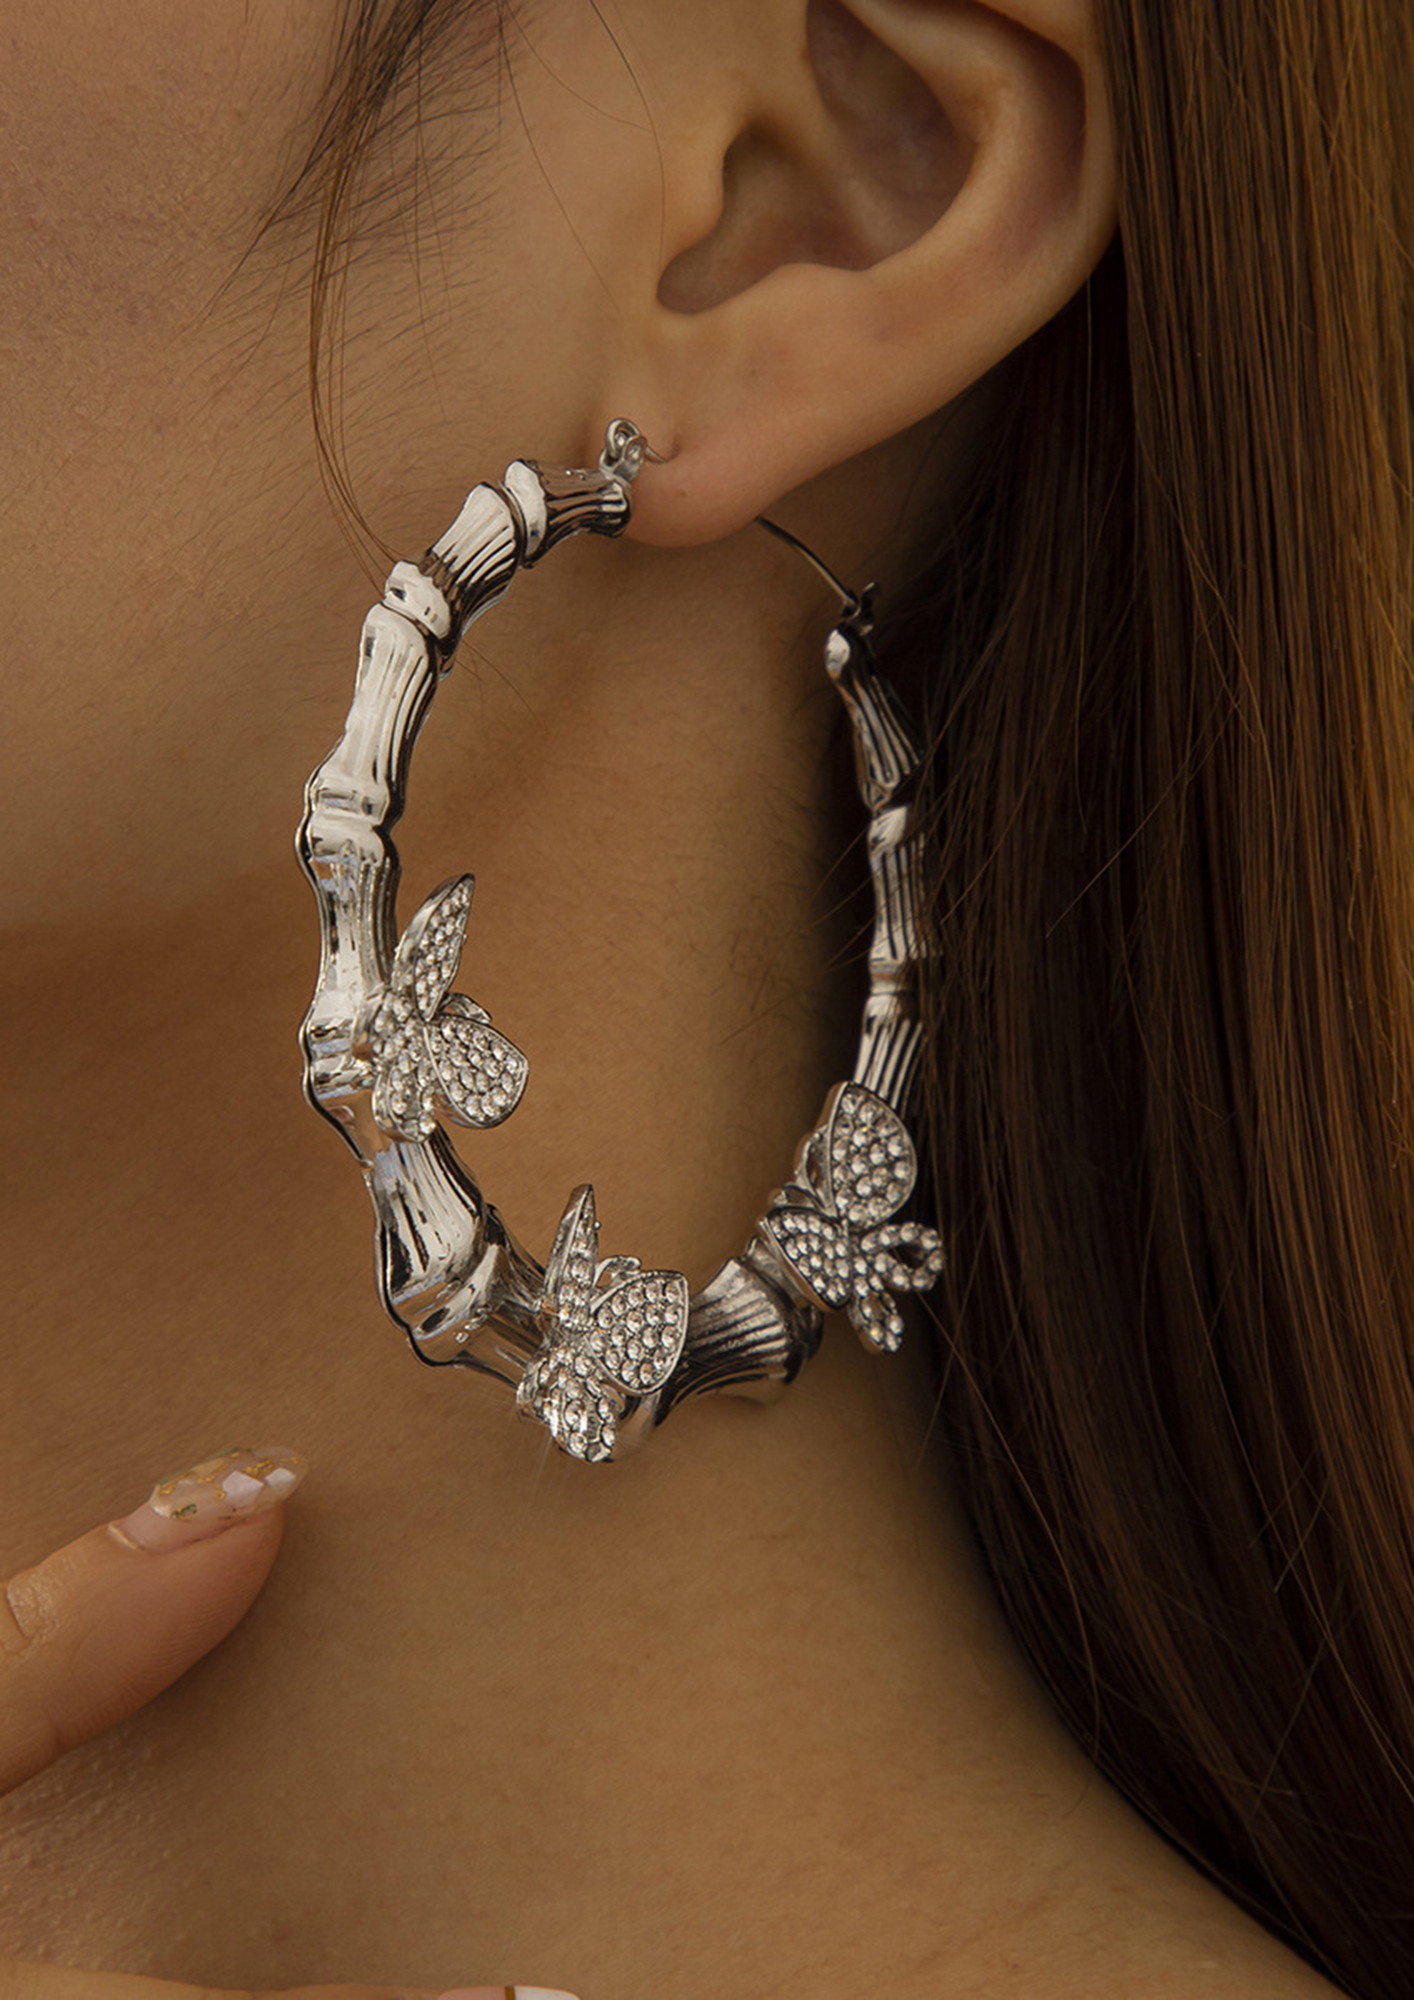 Indian Kundan Earrings Jewelry/big Chandbali Earring/polki - Etsy |  Chandbali earrings, Glam jewelry, Kundan earrings